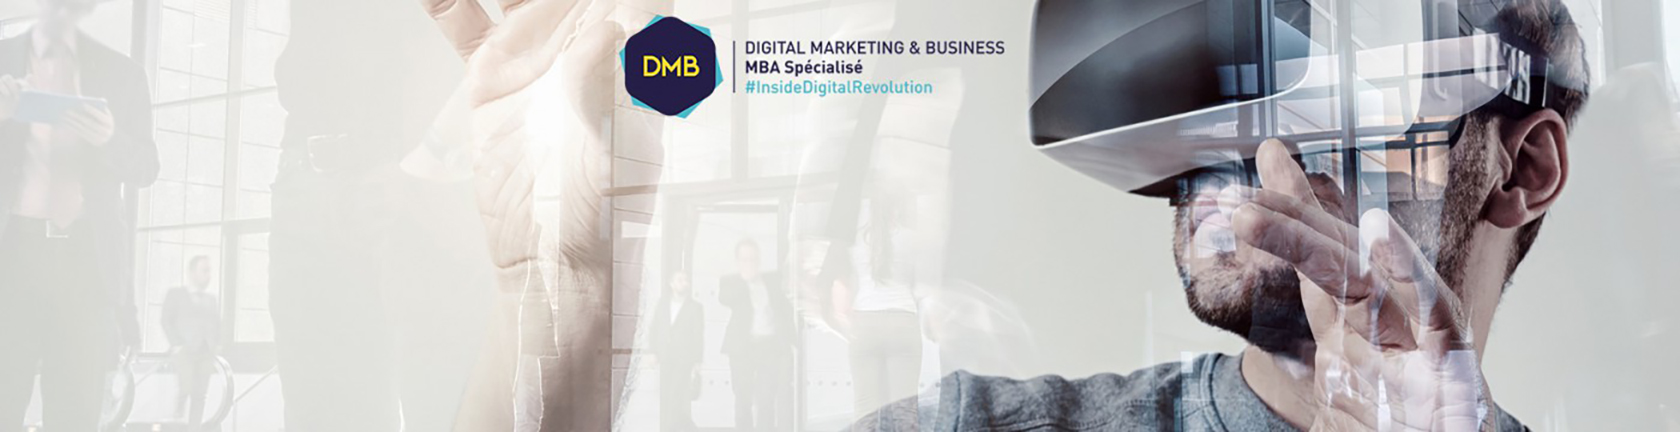 Master marketing digital - Ecole marketing digital EFAP